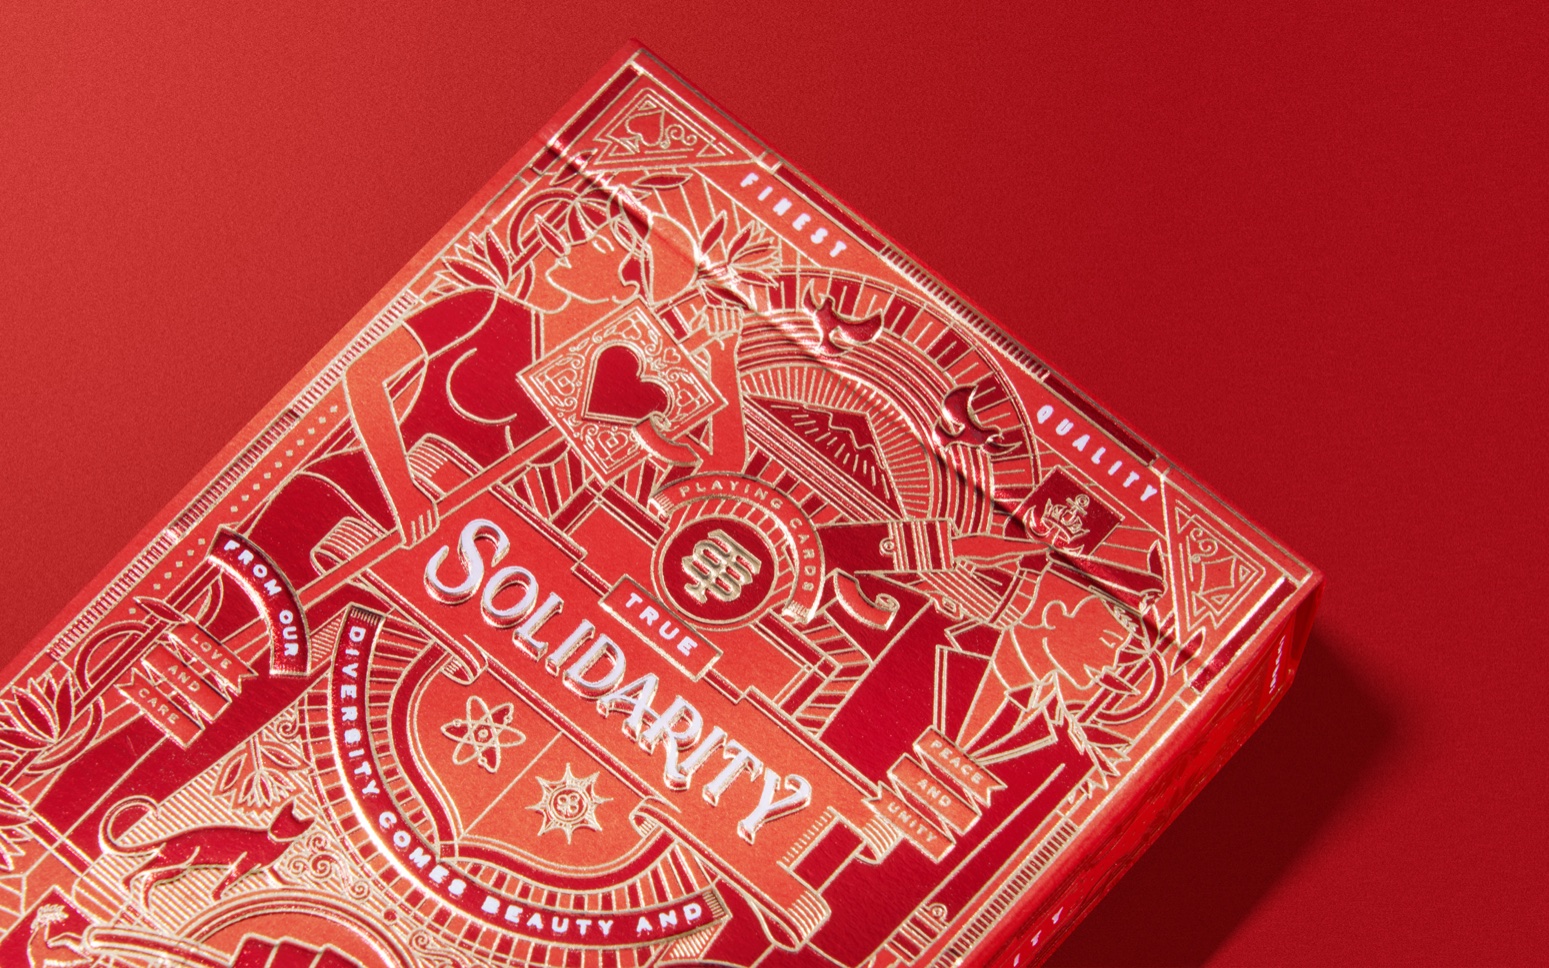 ‘Solidarity’ Playing Cards’ Packaging Is Intricate Beyond Belief